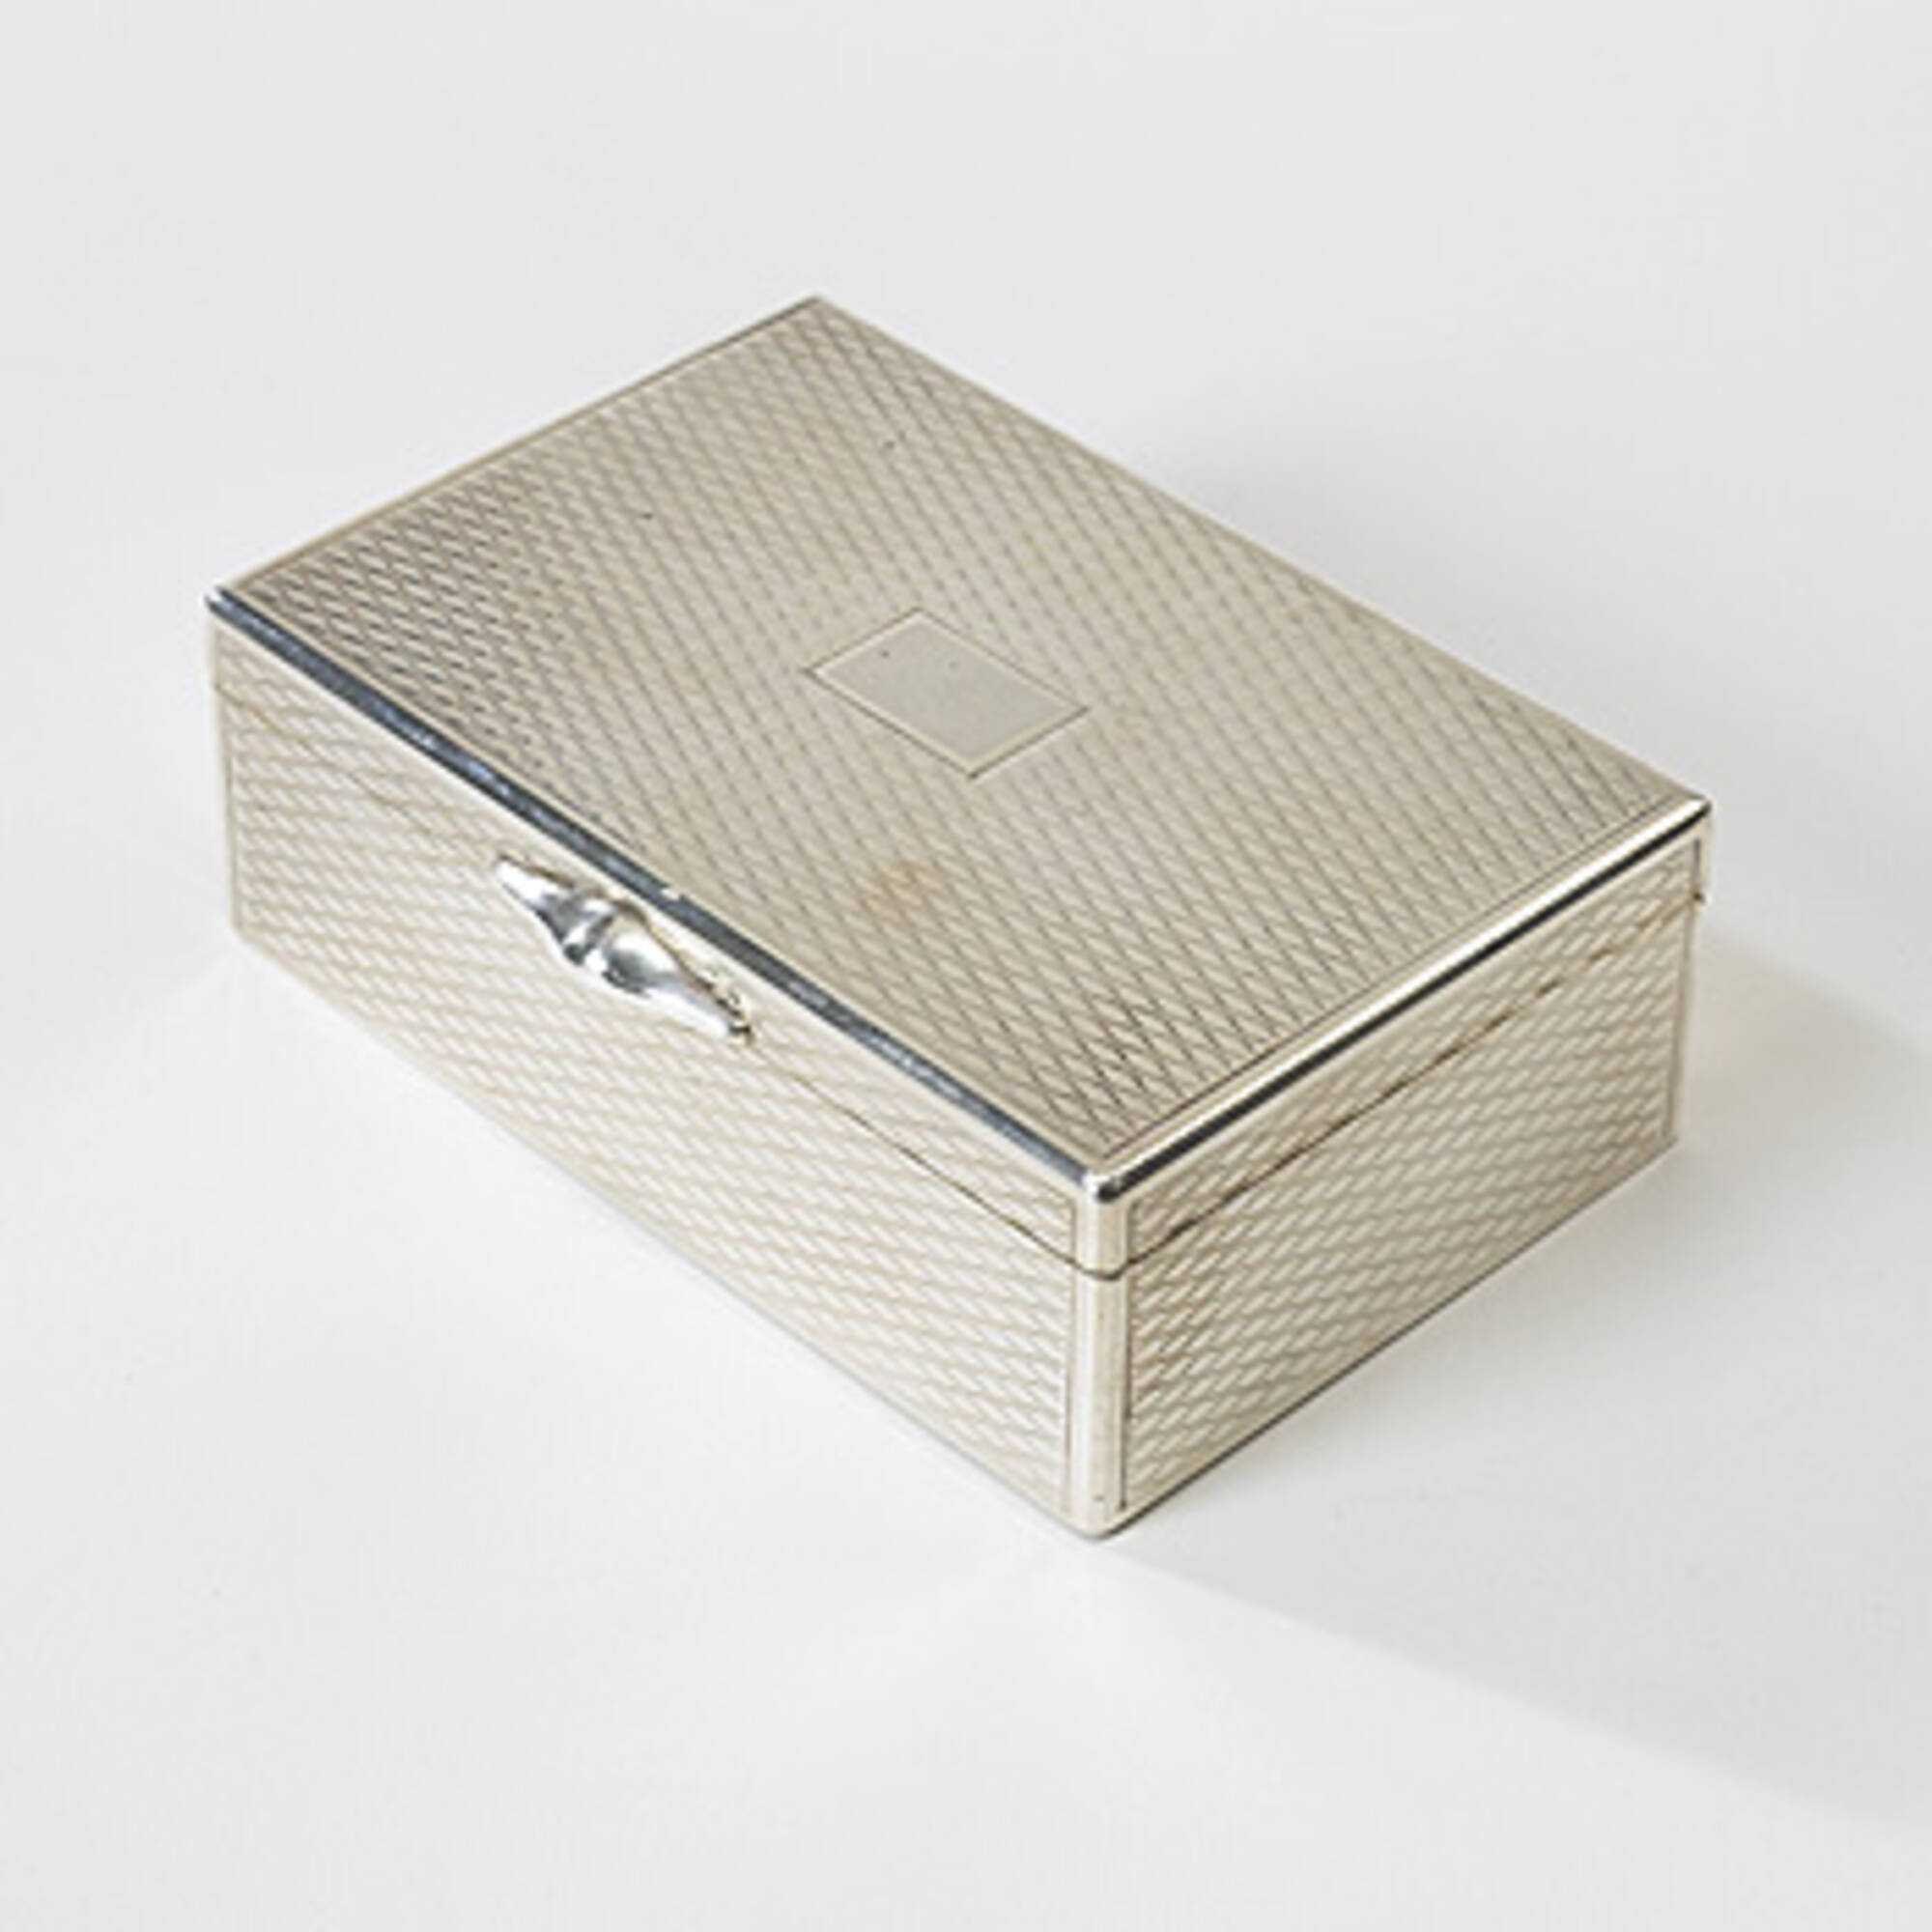 338: HERMES, cigarette box < Branded Luxury, 25 April 2006 < Auctions